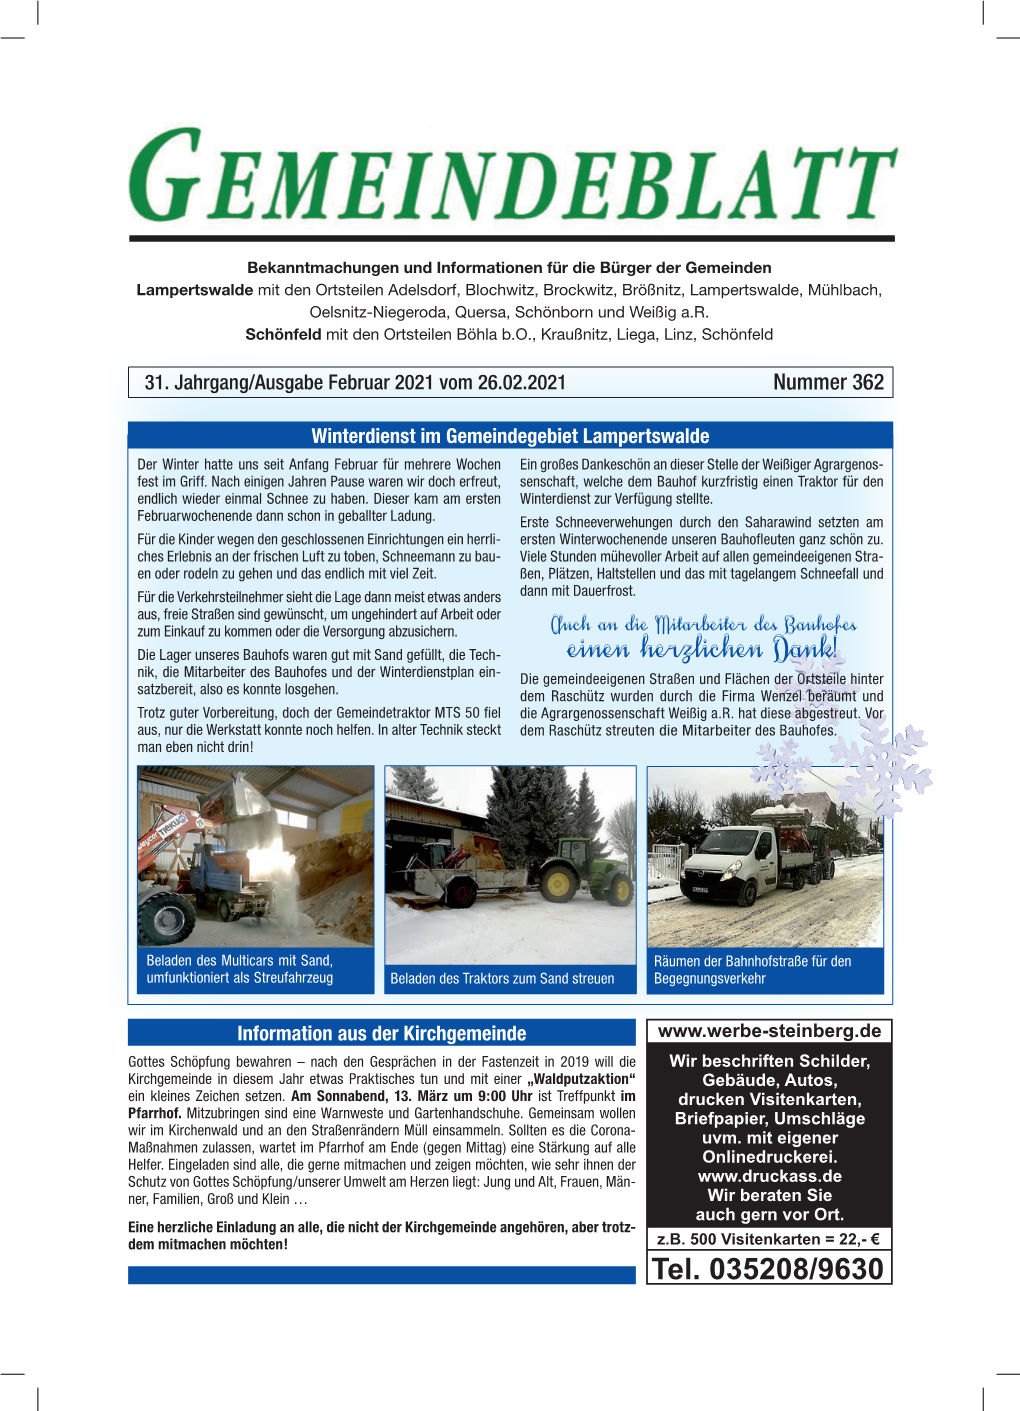 Gemeindeblatt Februar 2021 Nr. 362.Pdf